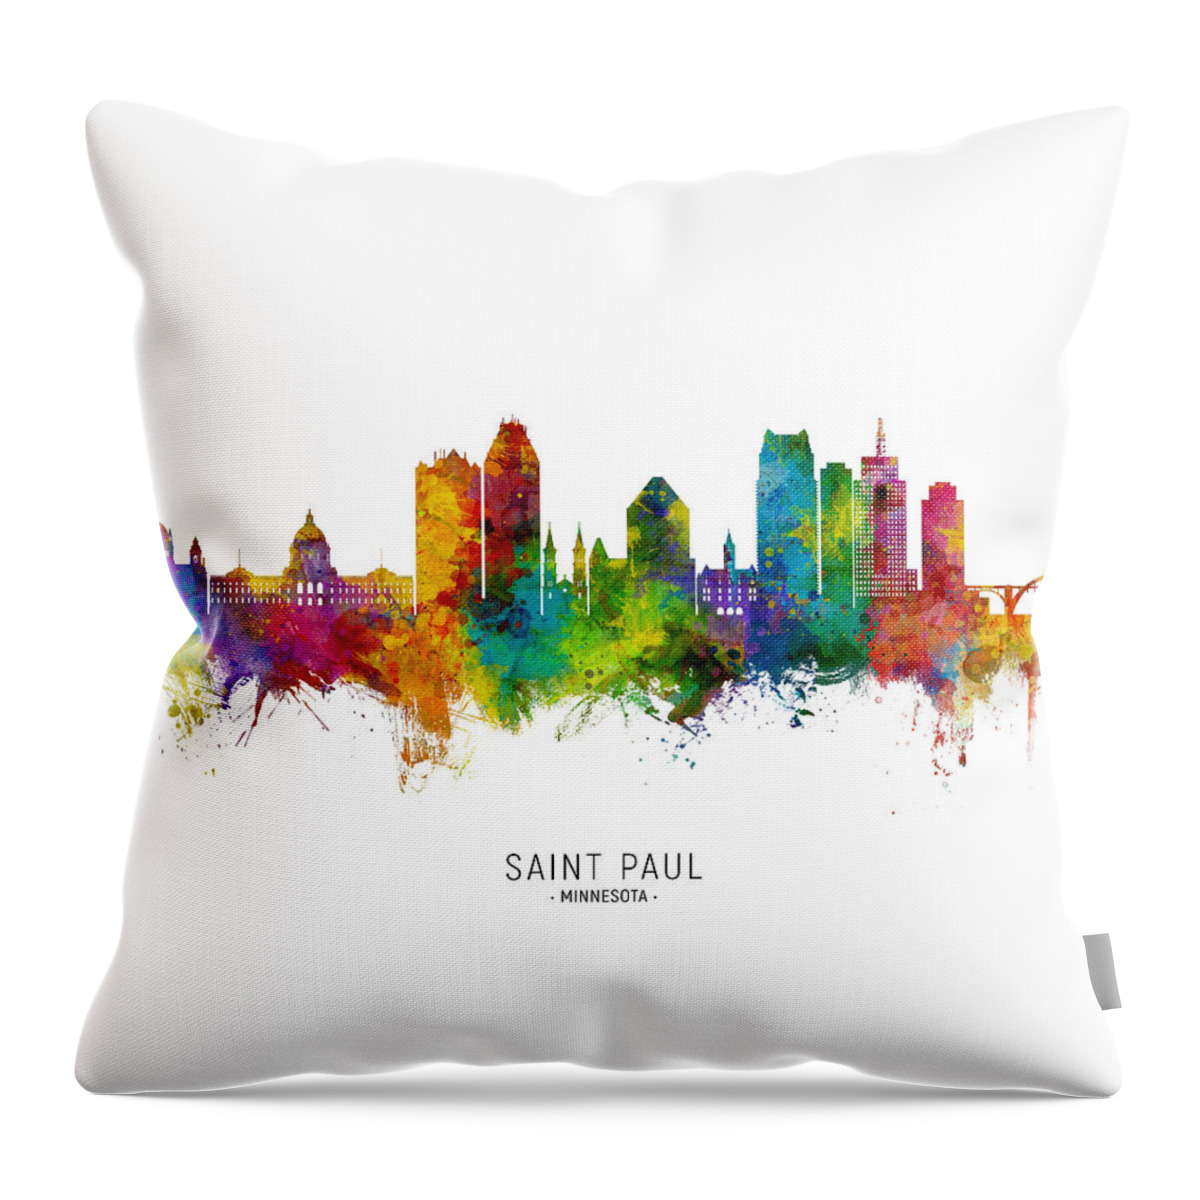 Saint Paul Throw Pillow featuring the digital art Saint Paul Minnesota Skyline by Michael Tompsett